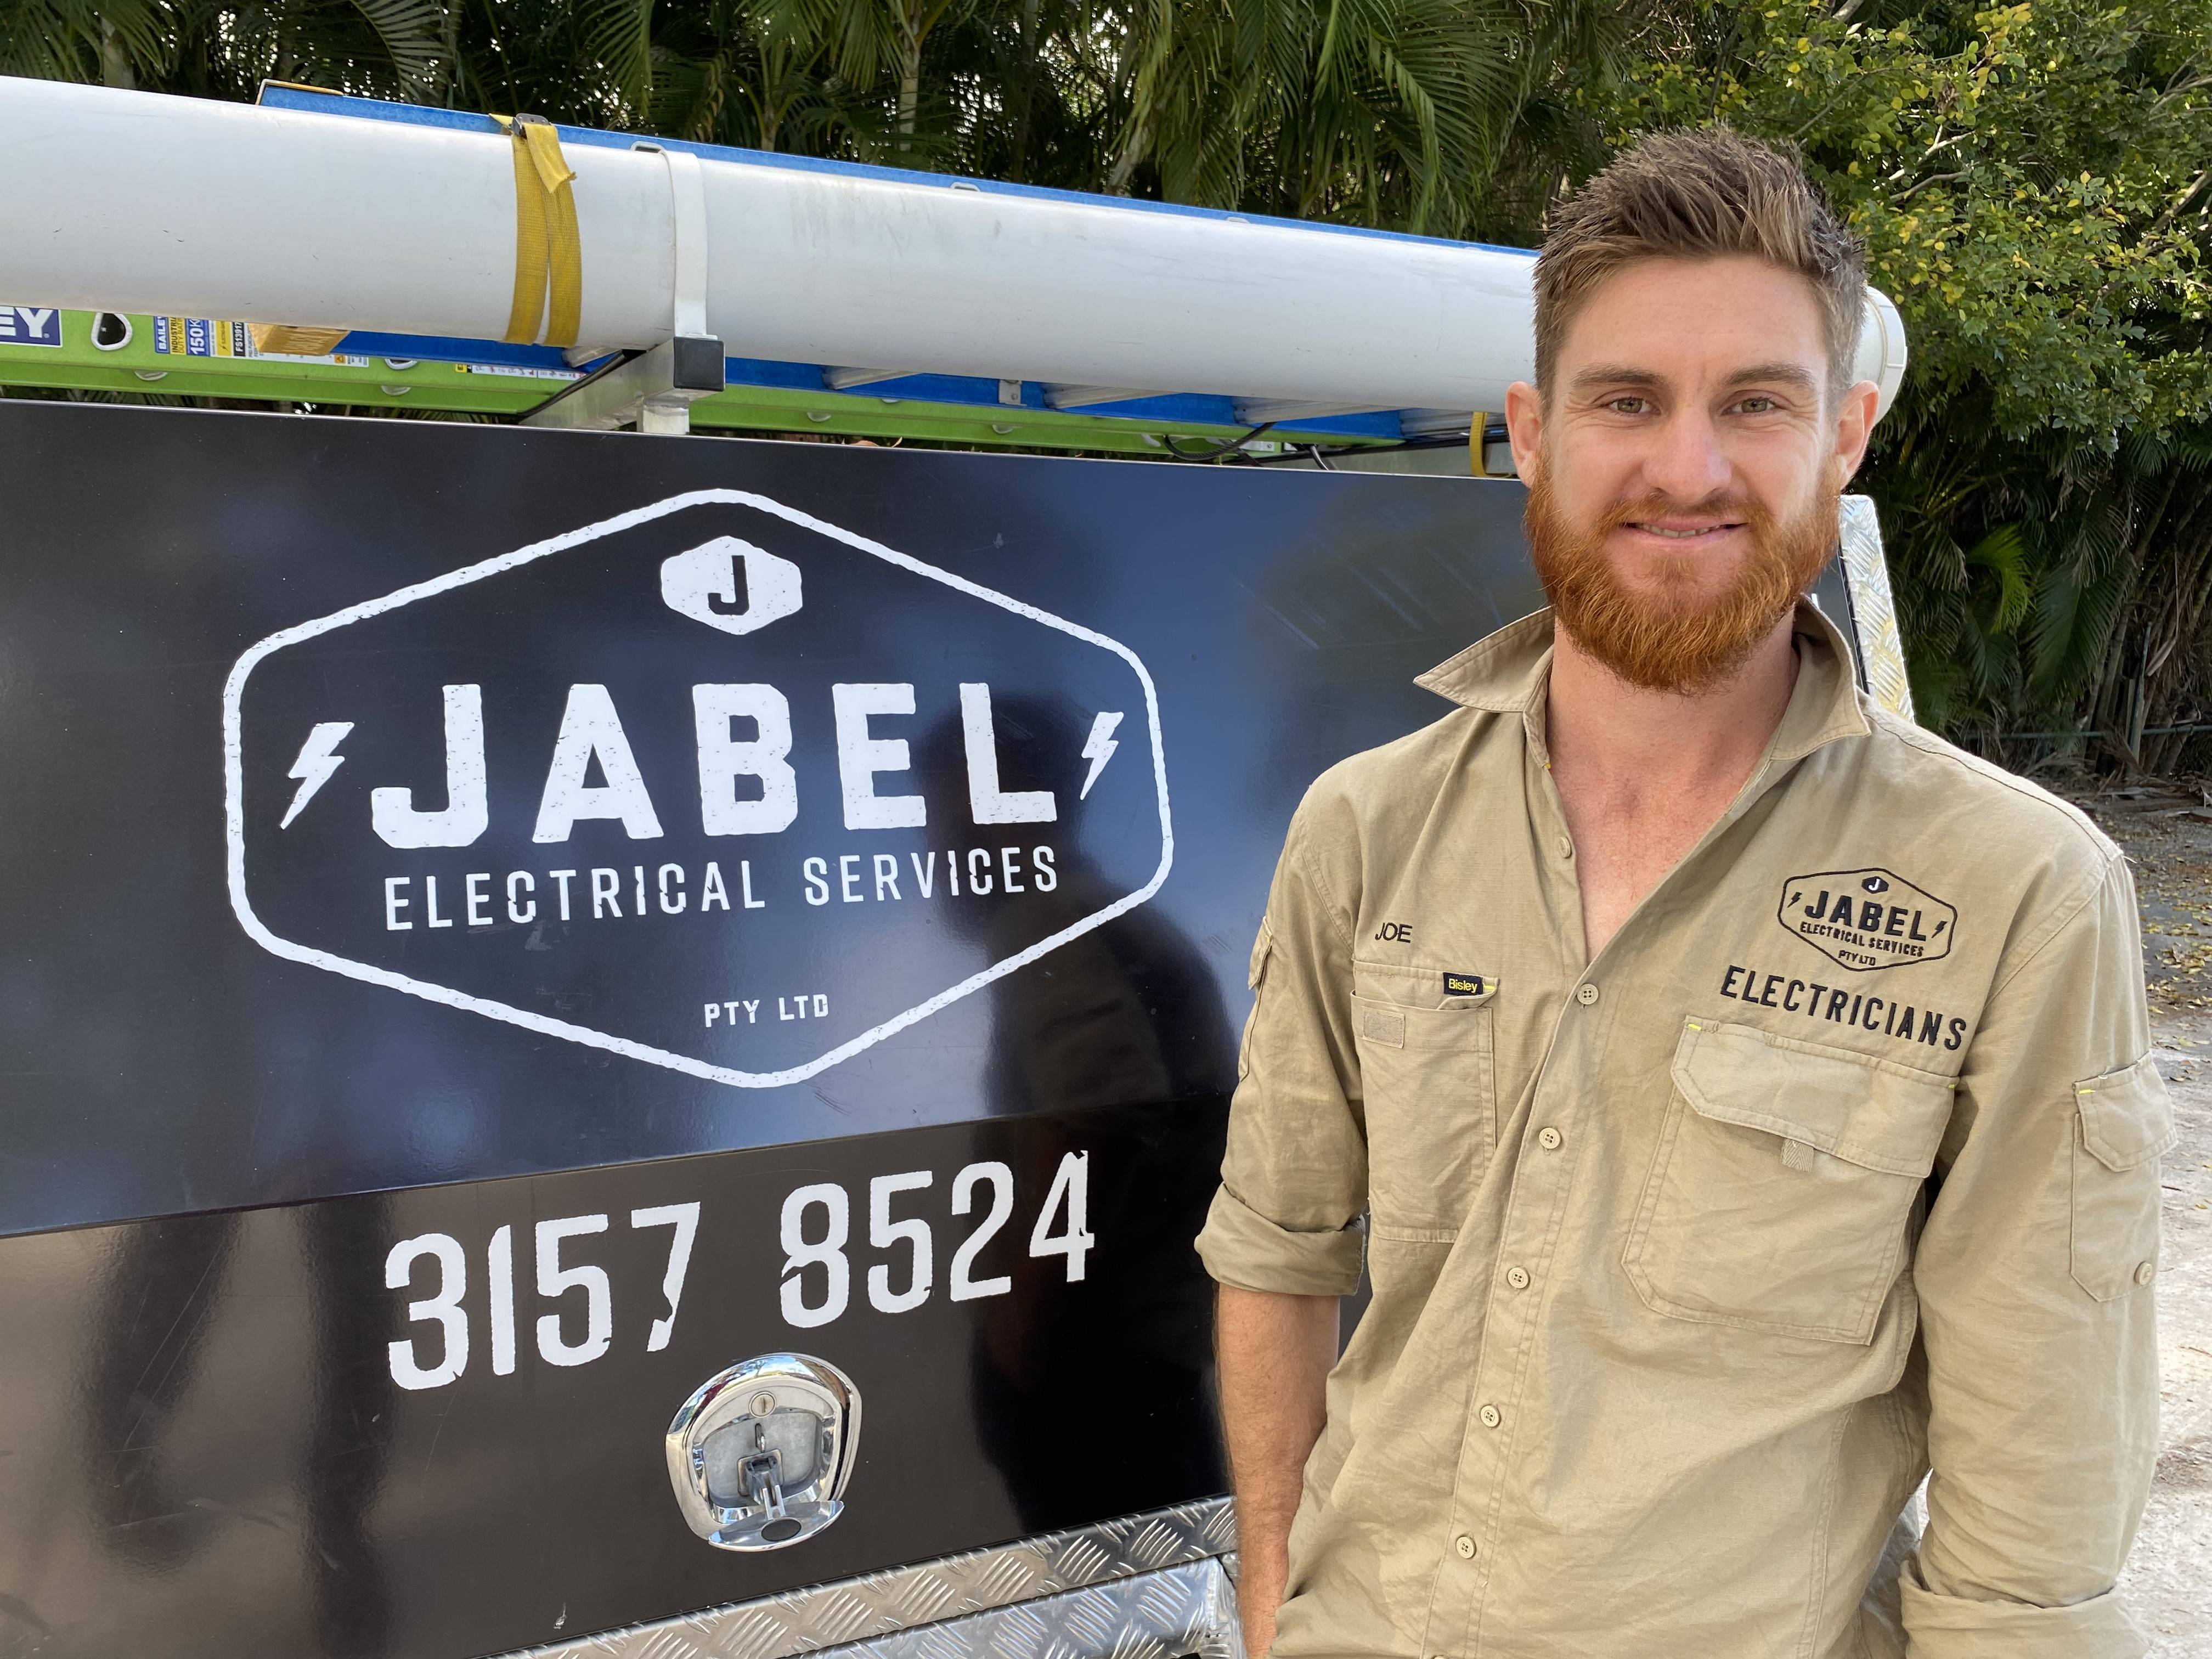 Onwer of Jabel Electrical services (Joe)